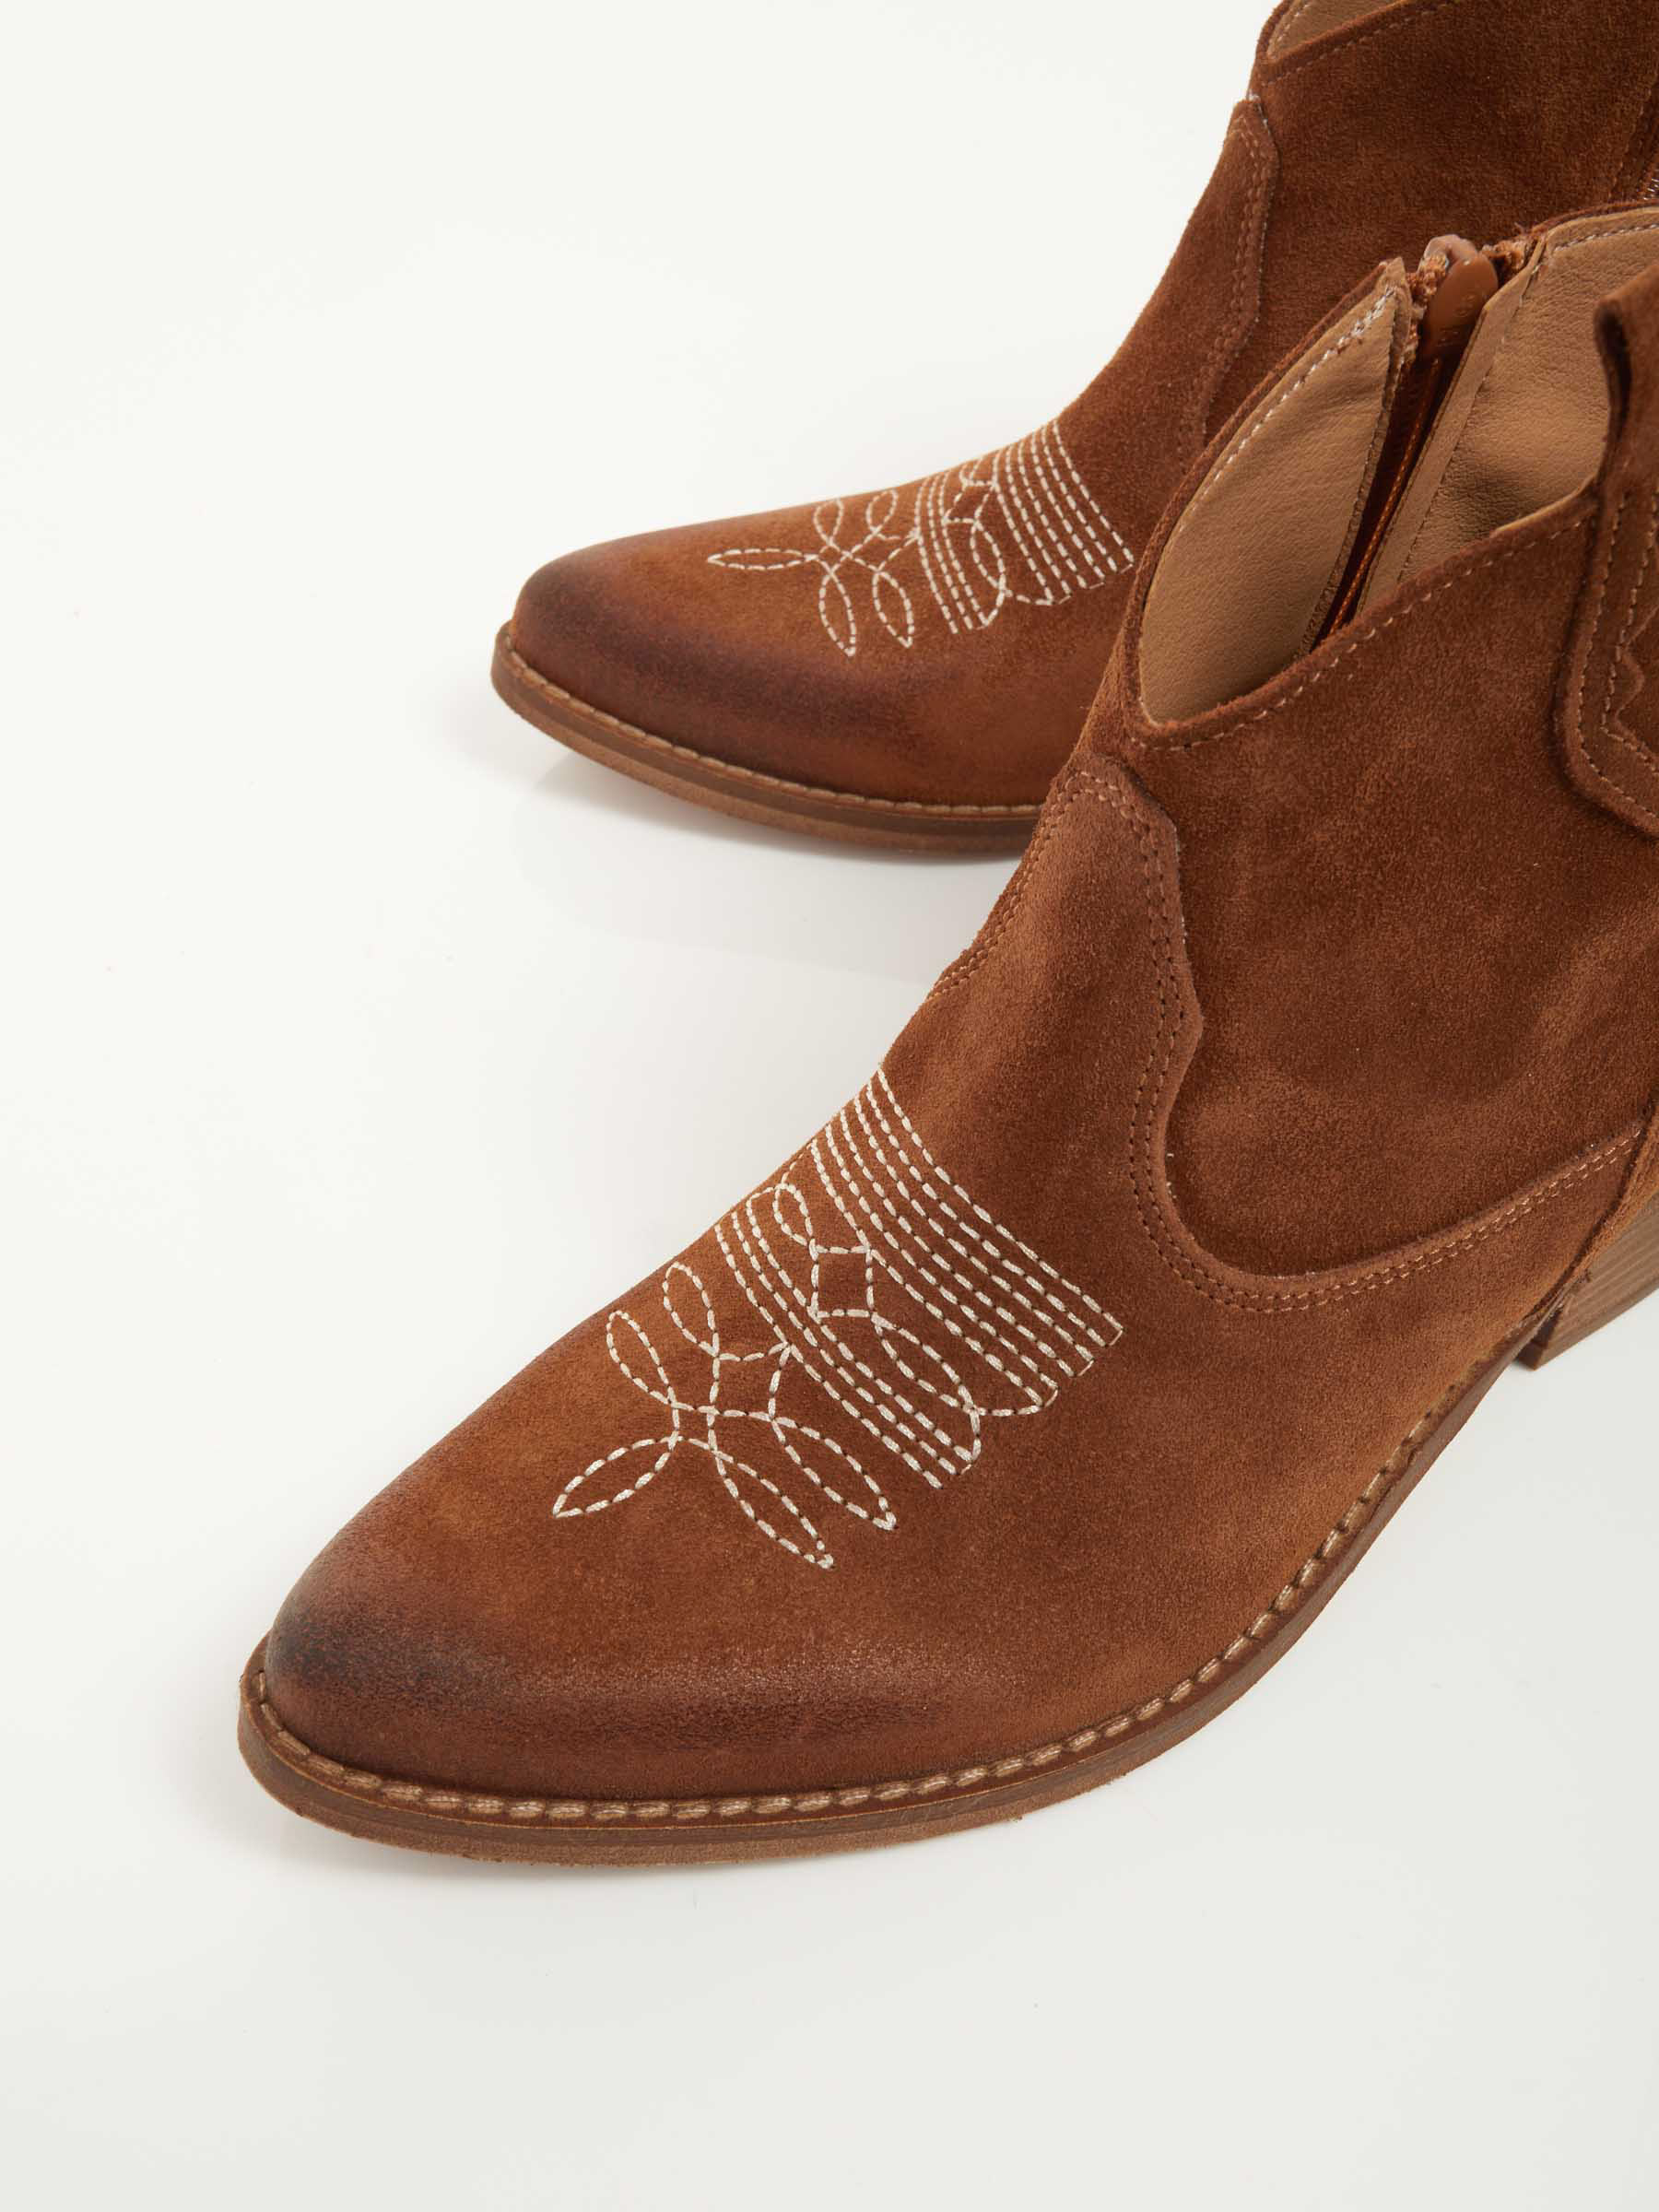 Sconti Dal 35% Al 70% Suede Cowboy Ankle Boots F0545554-0524 scarpe ovye